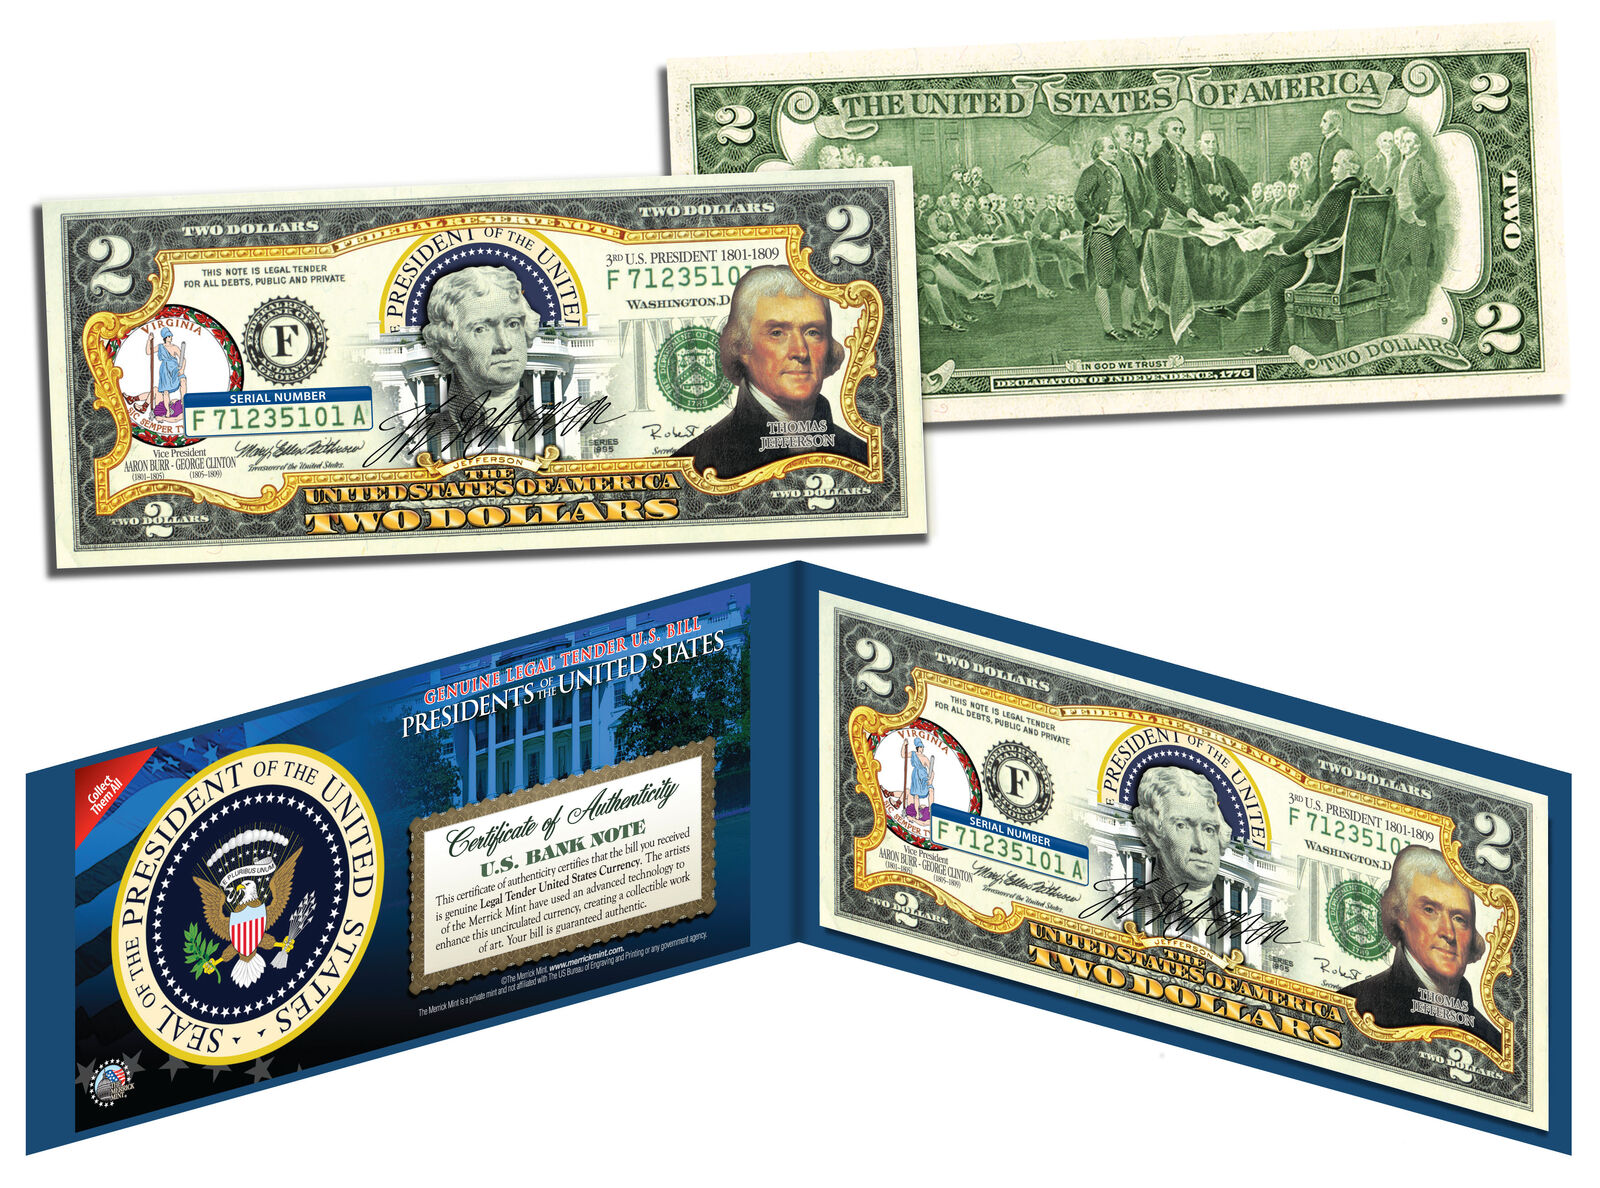 THOMAS JEFFERSON * 3rd U.S. President * Colorized $2 Bill Genuine Legal Tender